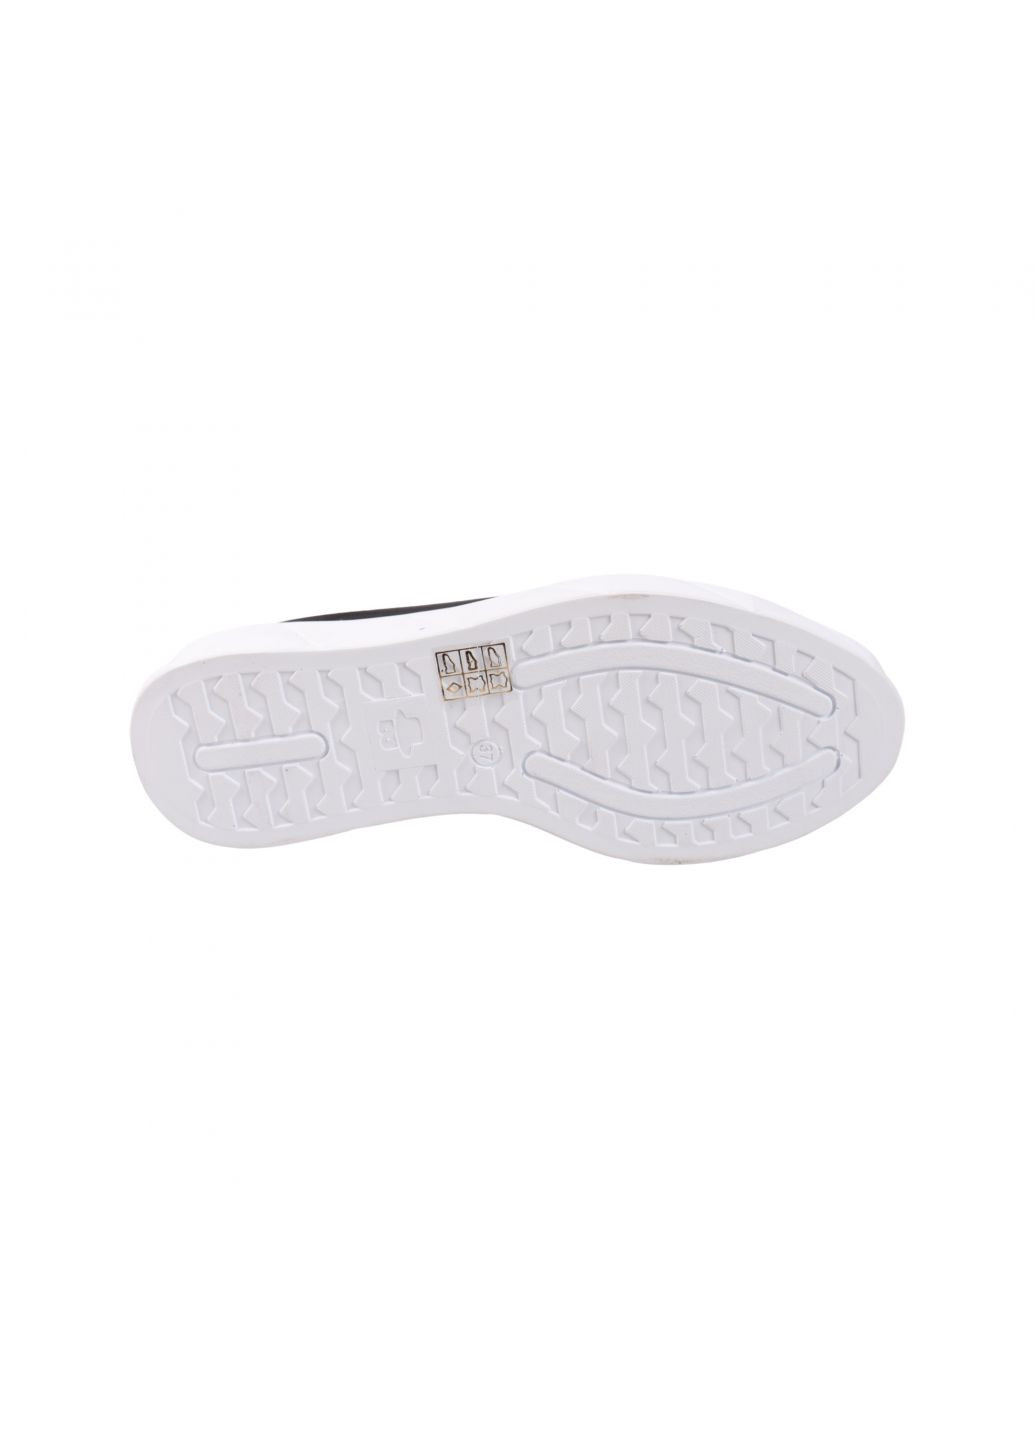 Туфлі жіночі білі натуральна шкіра Guero 505-23ltcp (258670765)